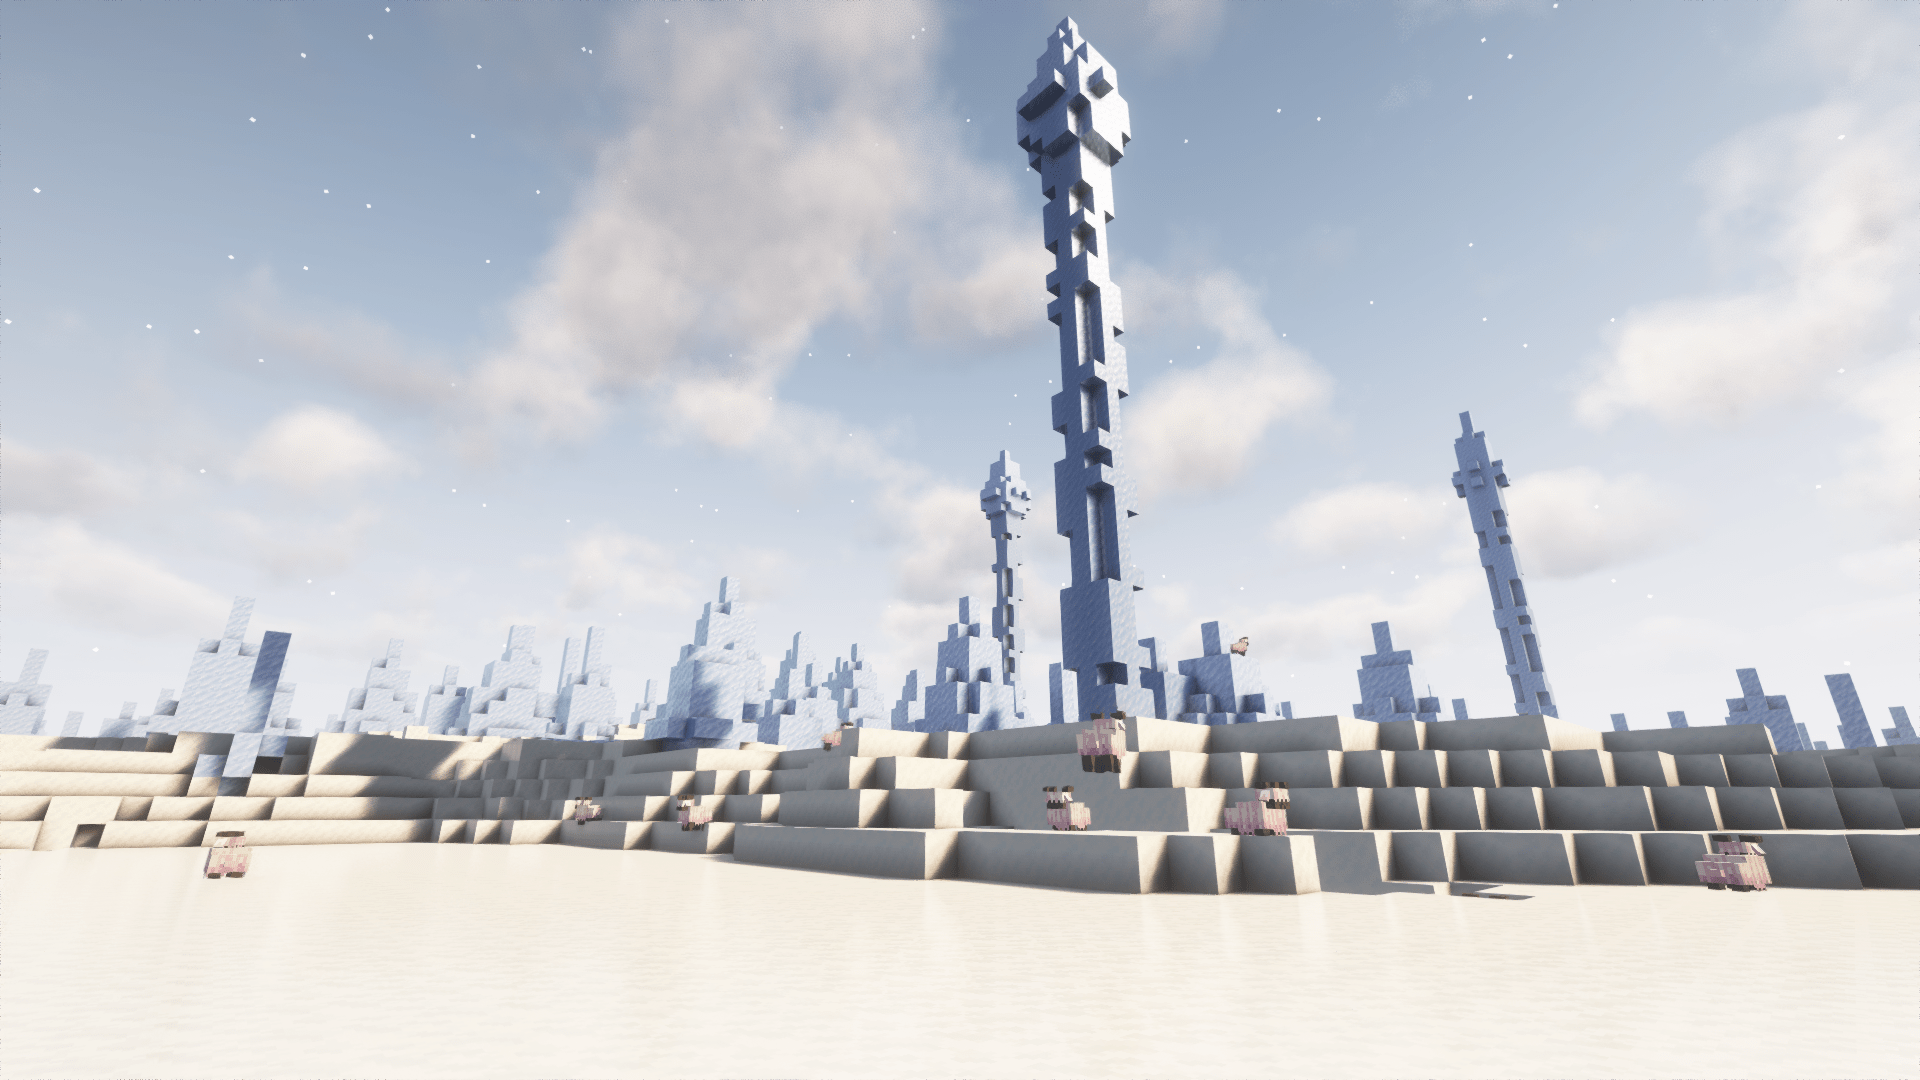 The Ice Towers of Glacio